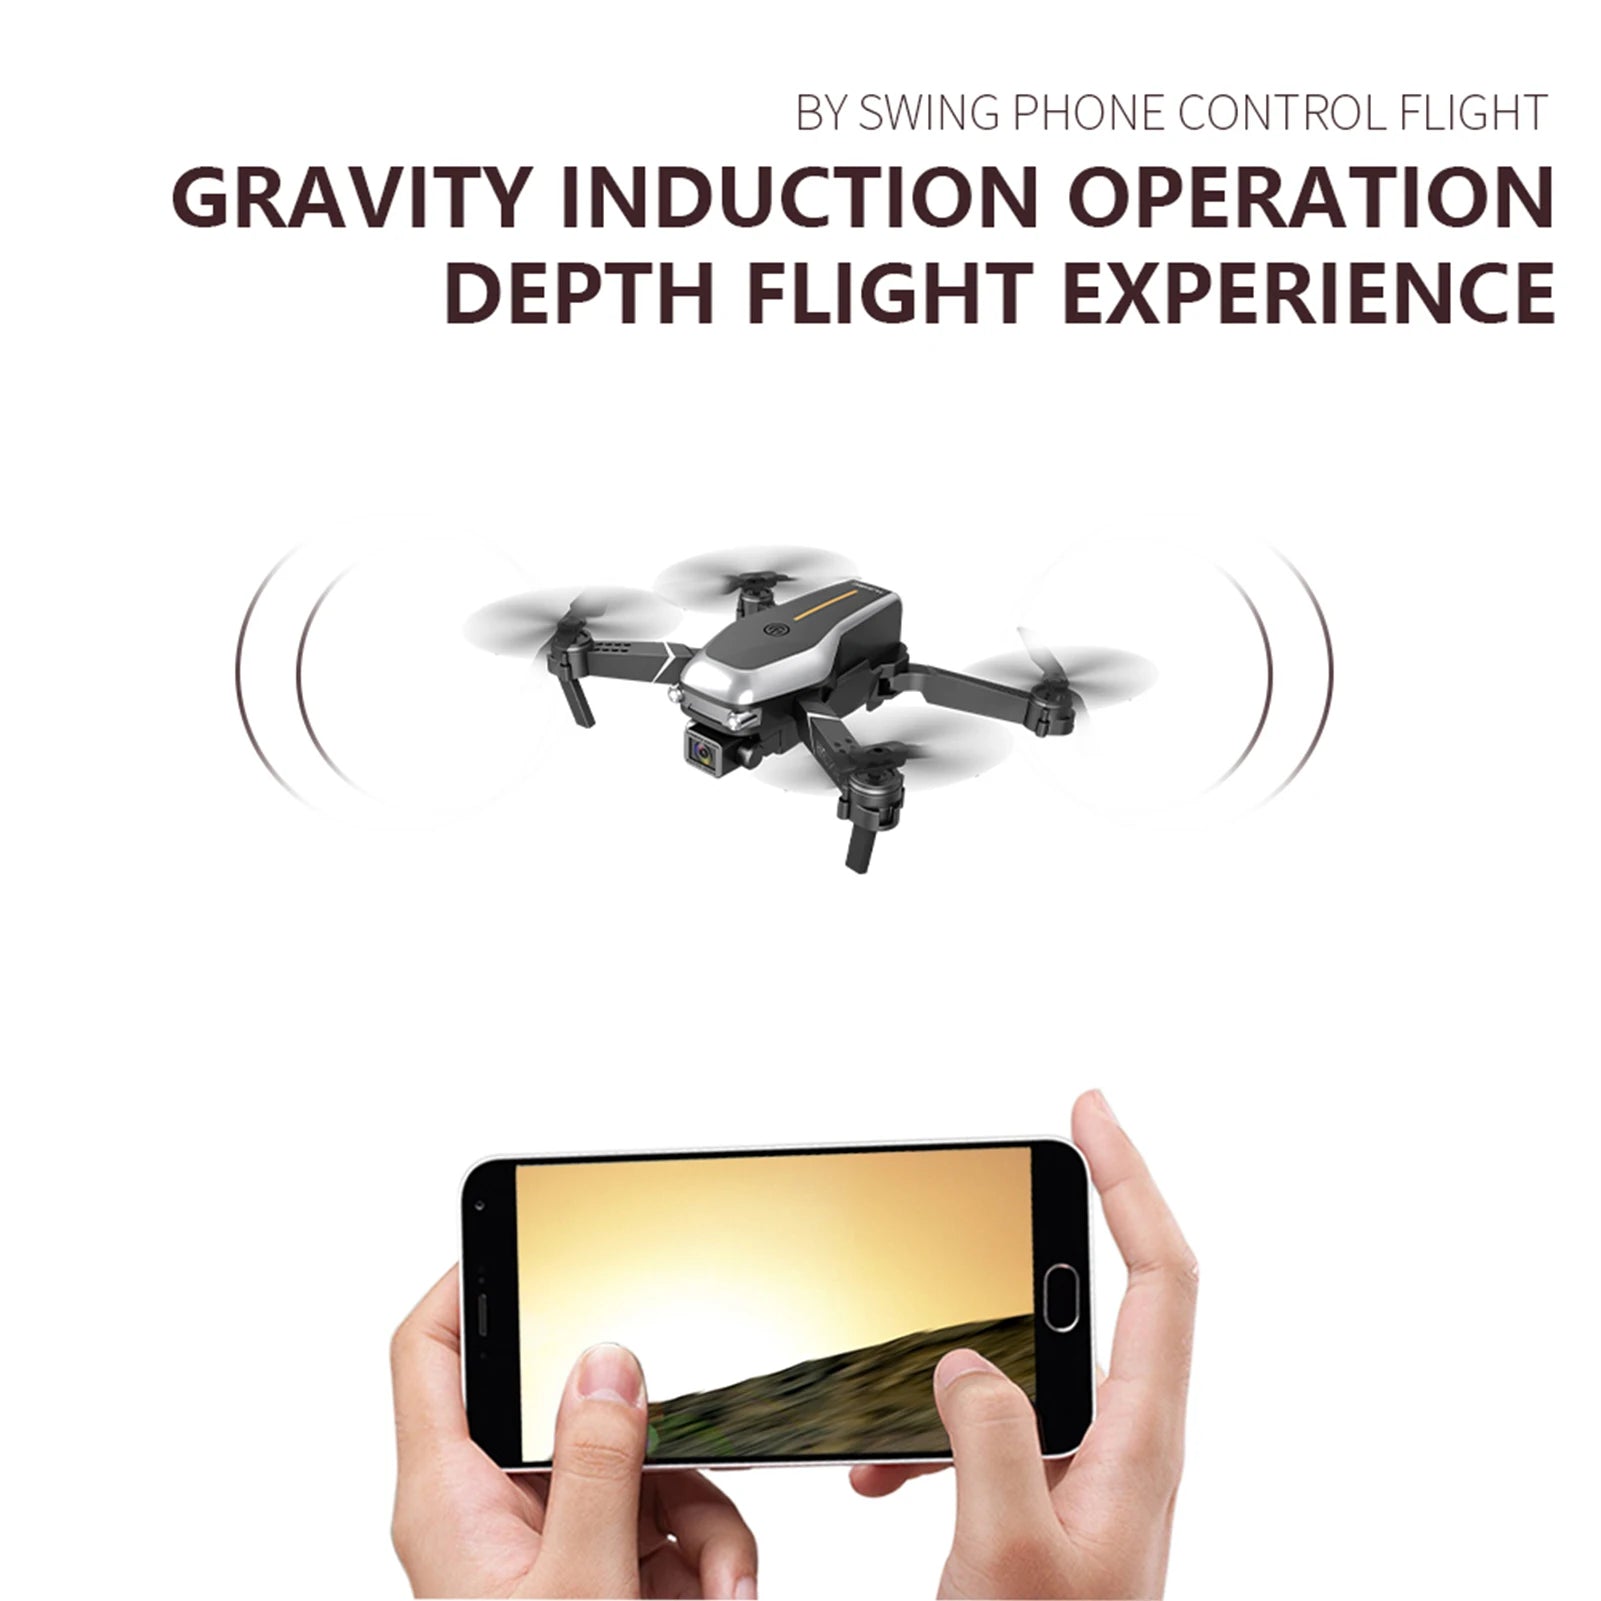 HJ95 Drone, swing phone control flight experience depth flight operation depth flight experience